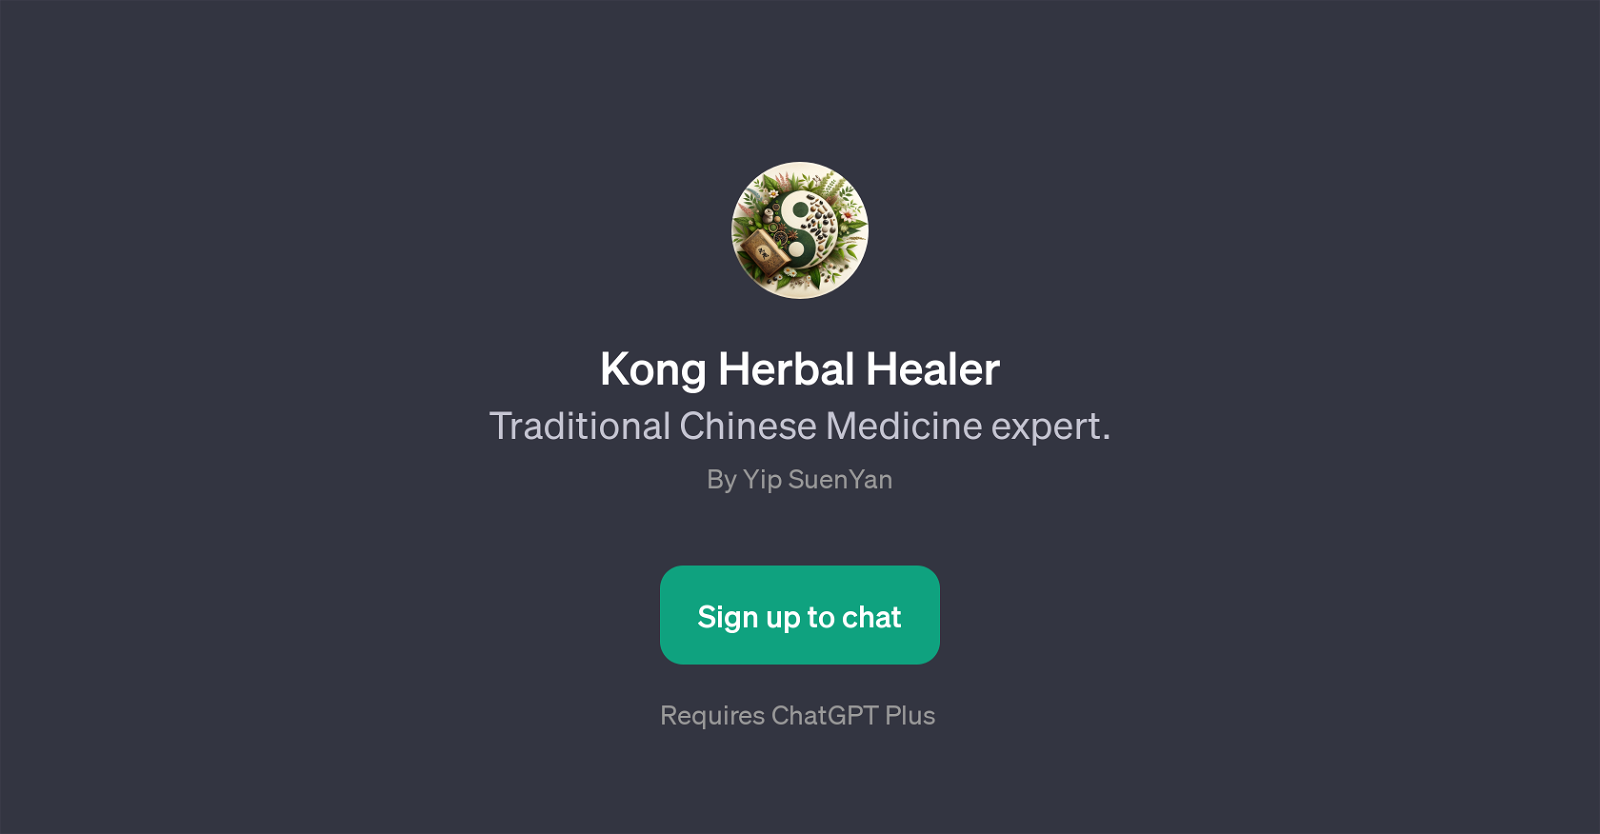 Kong Herbal Healer website